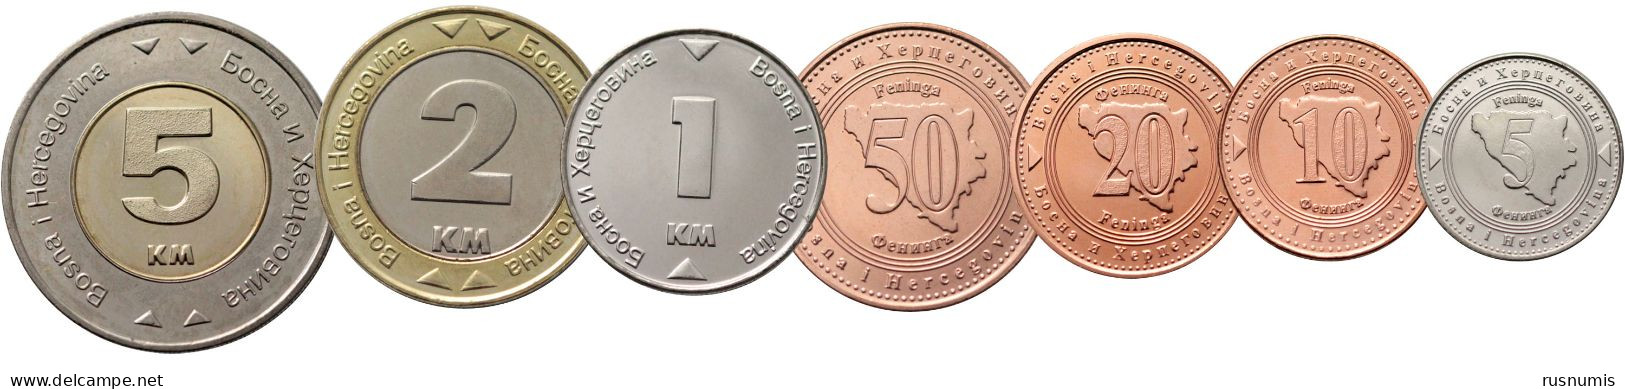 BOSNIA AND HERZEGOVINA 7 COINS SET 5 10 20 50 FENINGA 1 2 5 KM MARAKA BIMETAL 2009 2021 UNC - Bosnien-Herzegowina